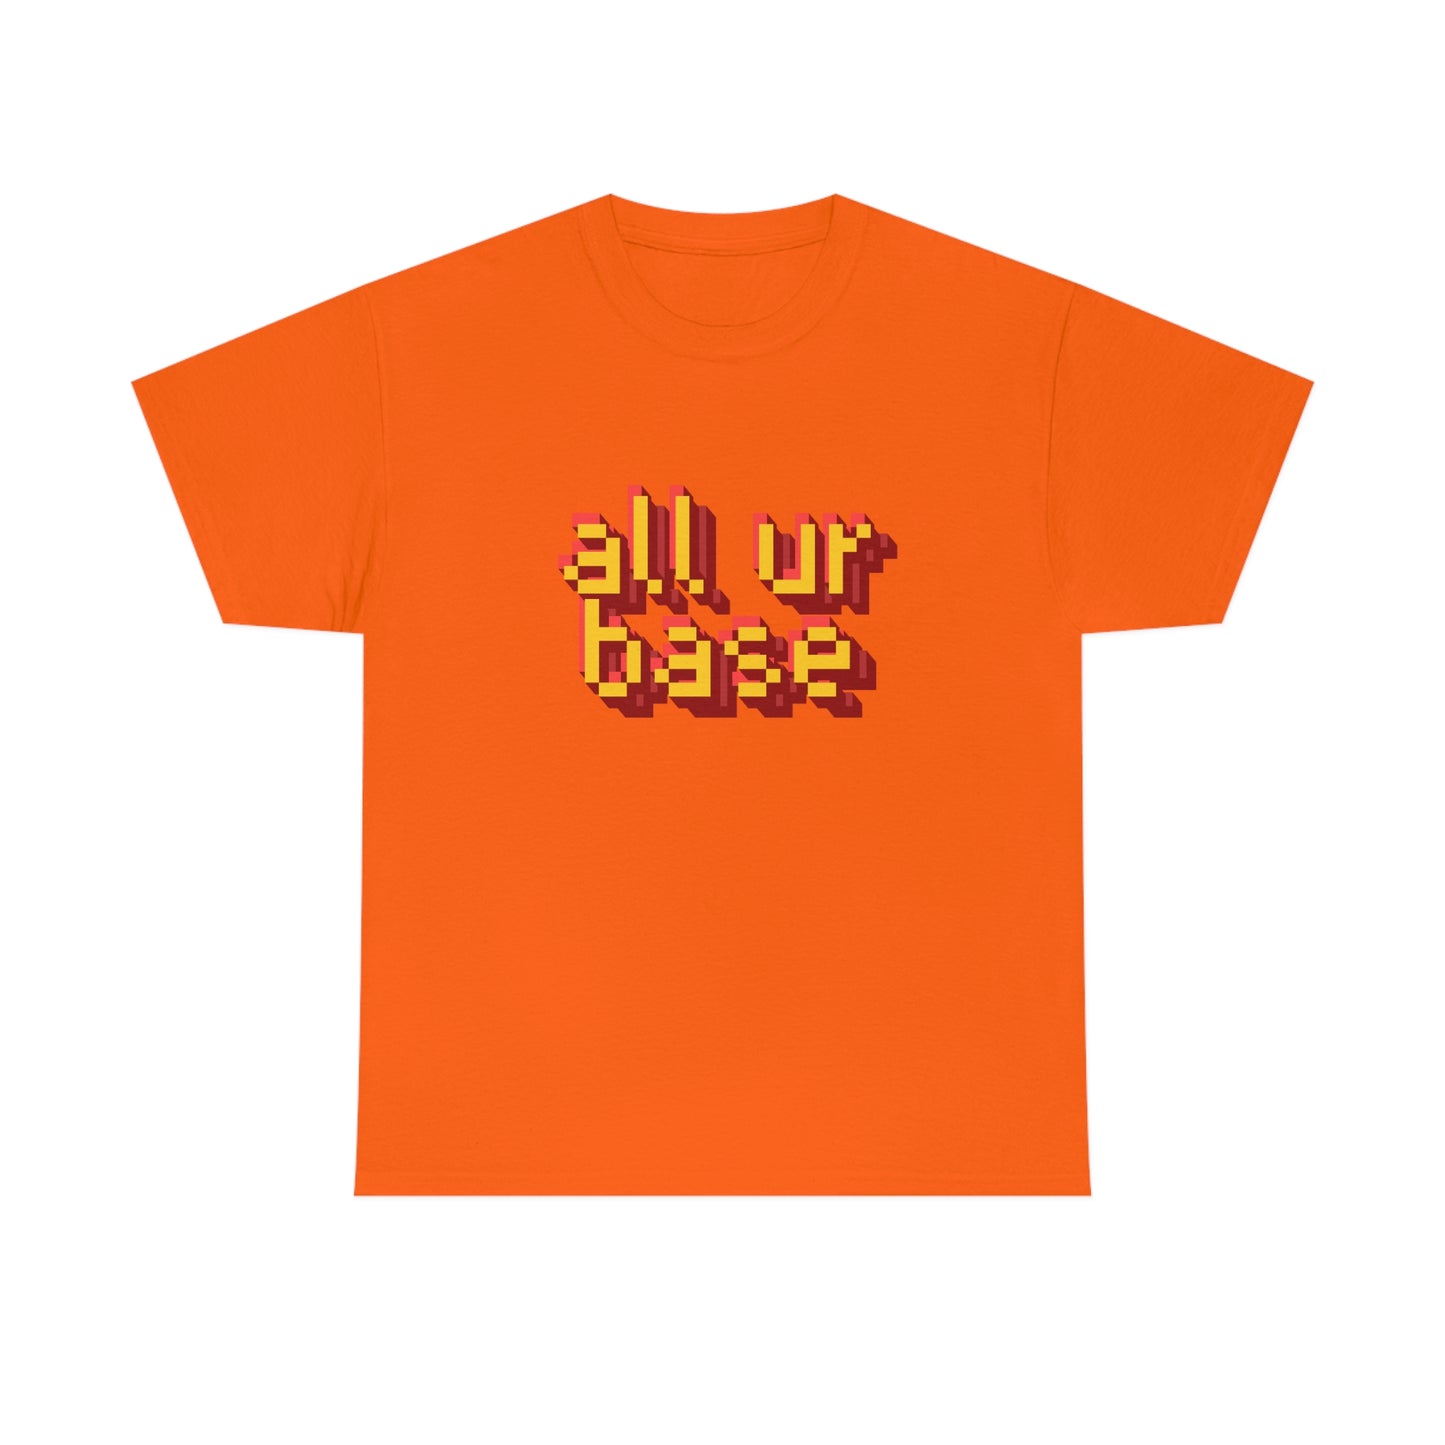 All Your Base Unisex Cotton T-shirt